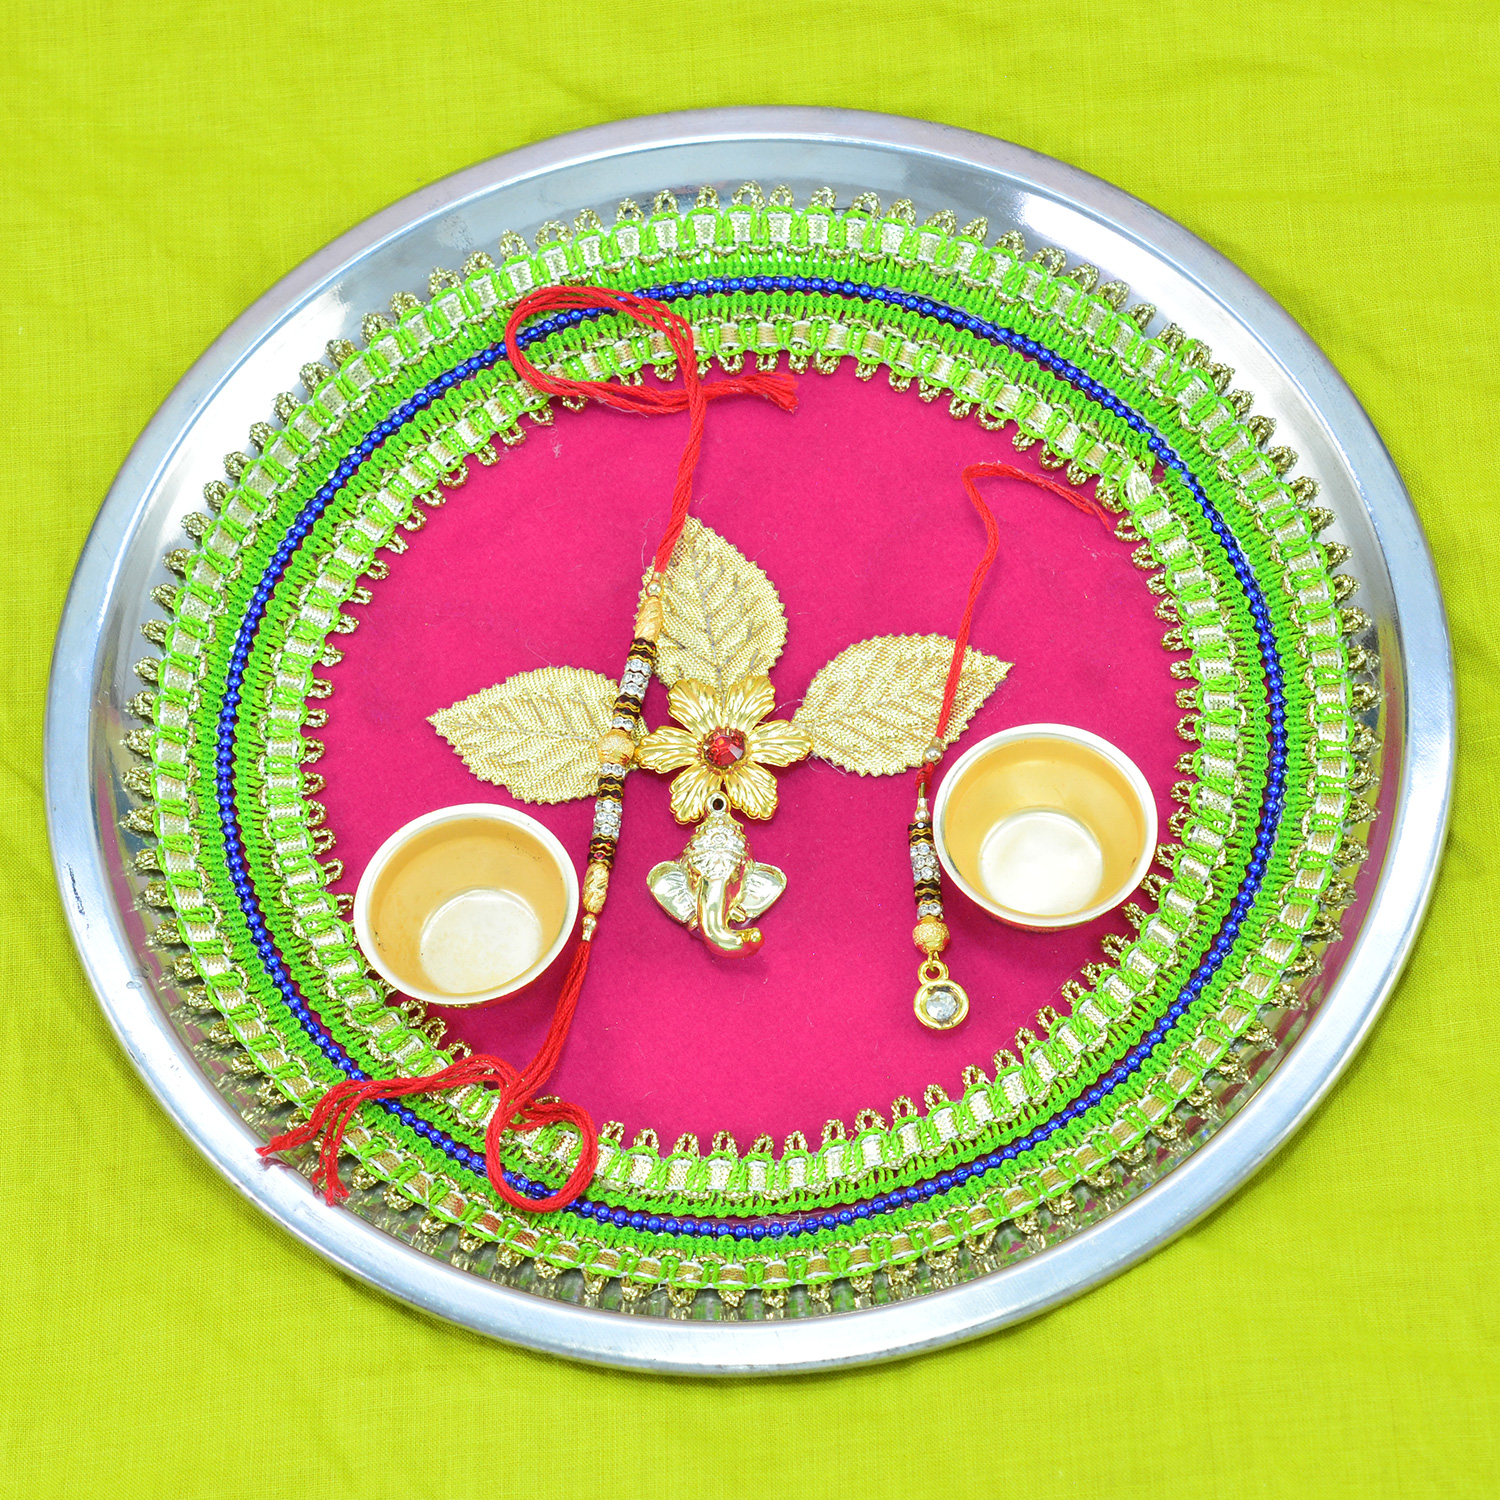 Green and Pink Colored Ganesha Rakhi Pooja Thali